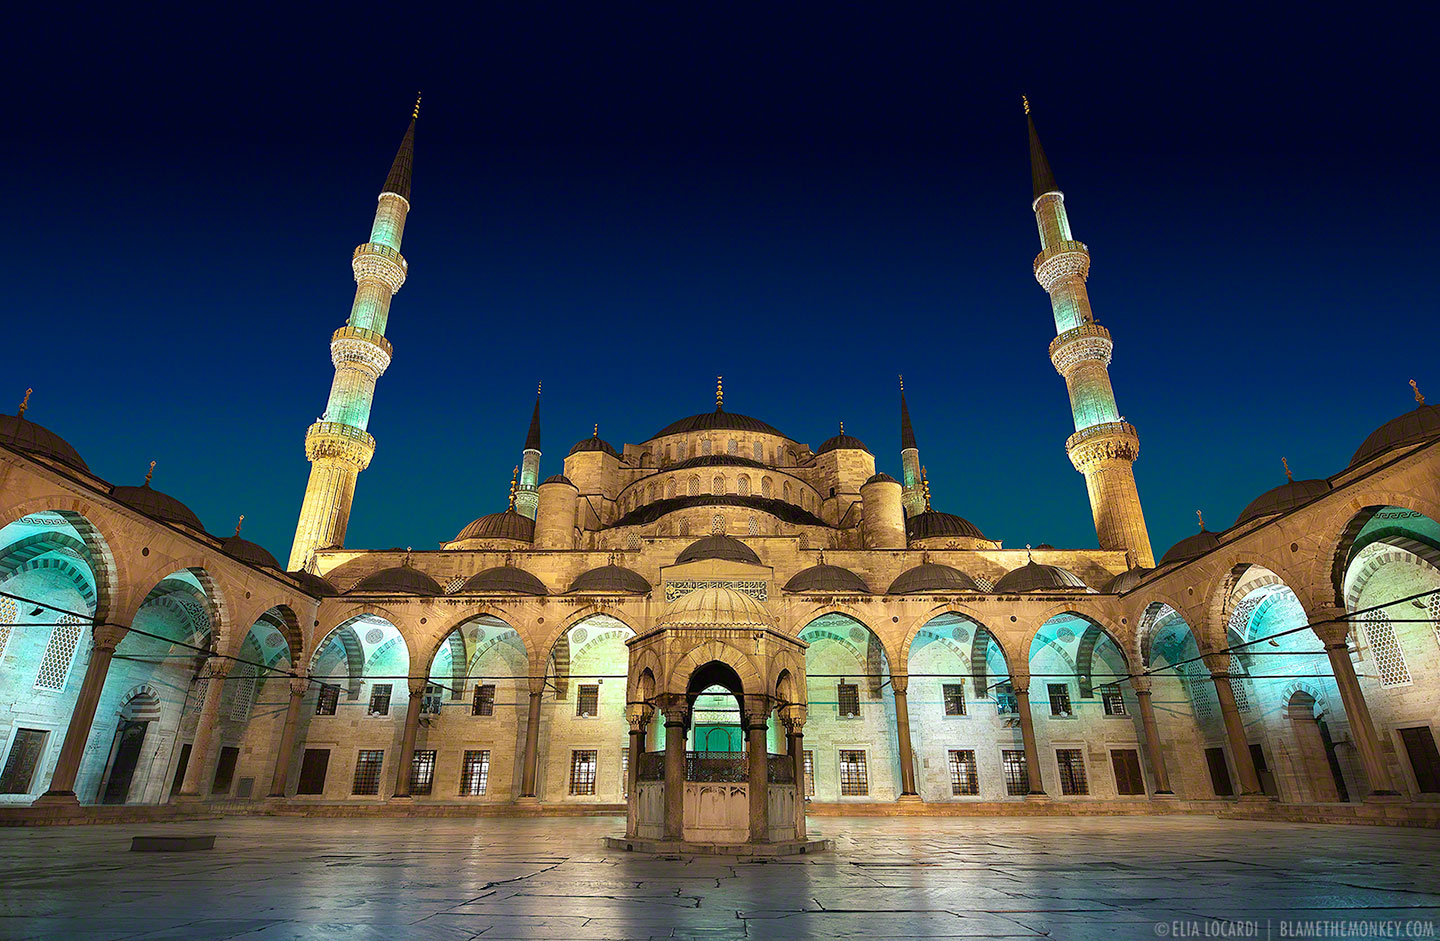 The Majestic Courtyard || Istanbul Turkey